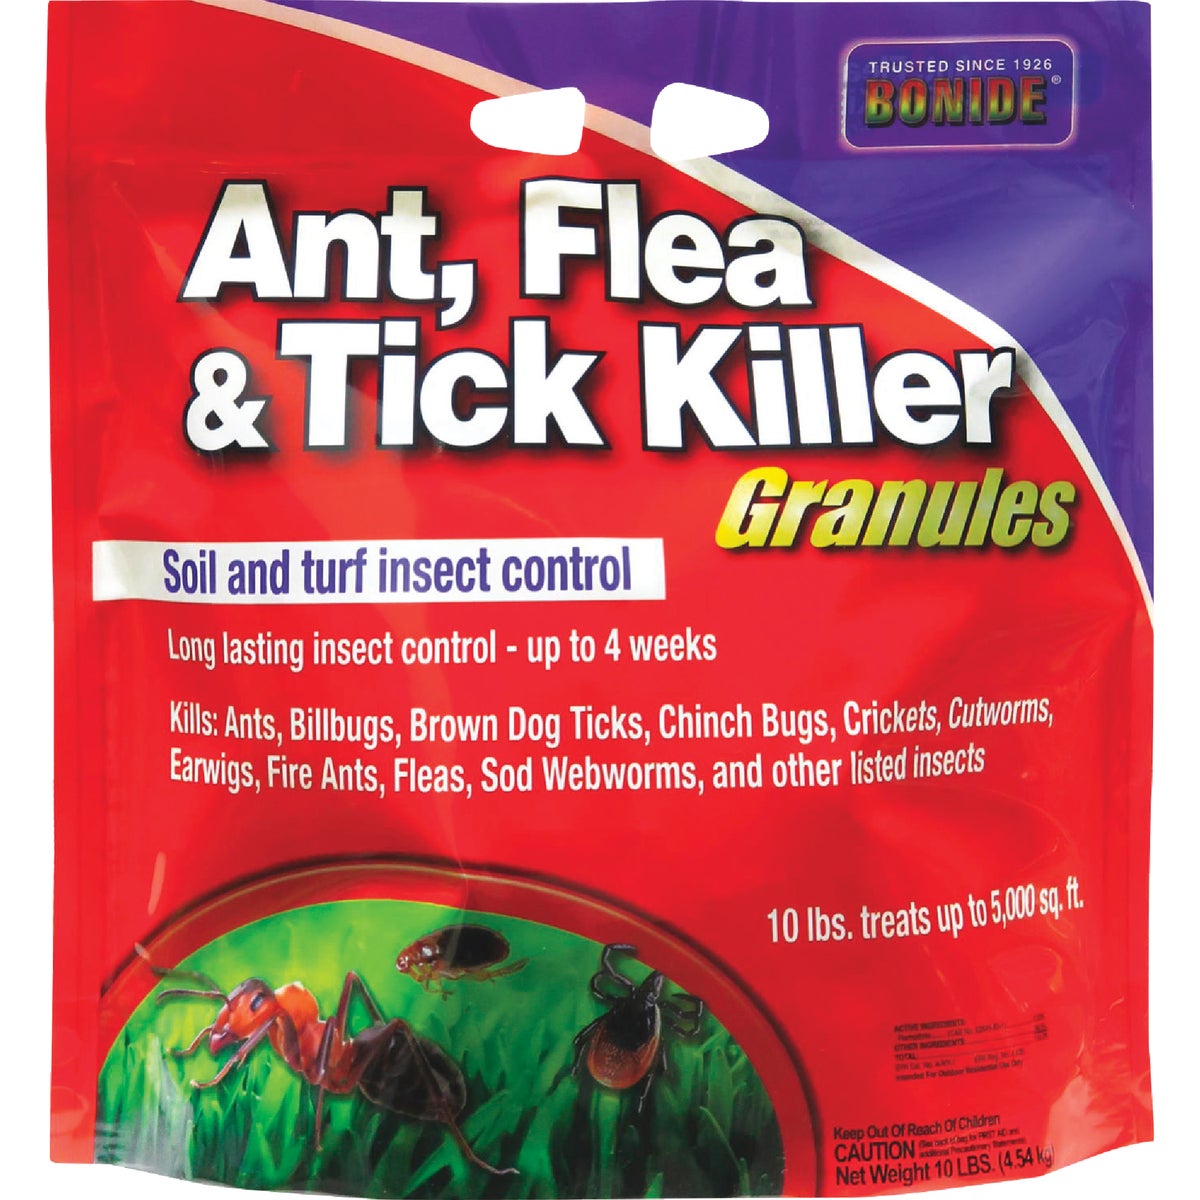 Bonide 10 Lb. Ready To Use Granules Flea, Tick, & Ant Killer